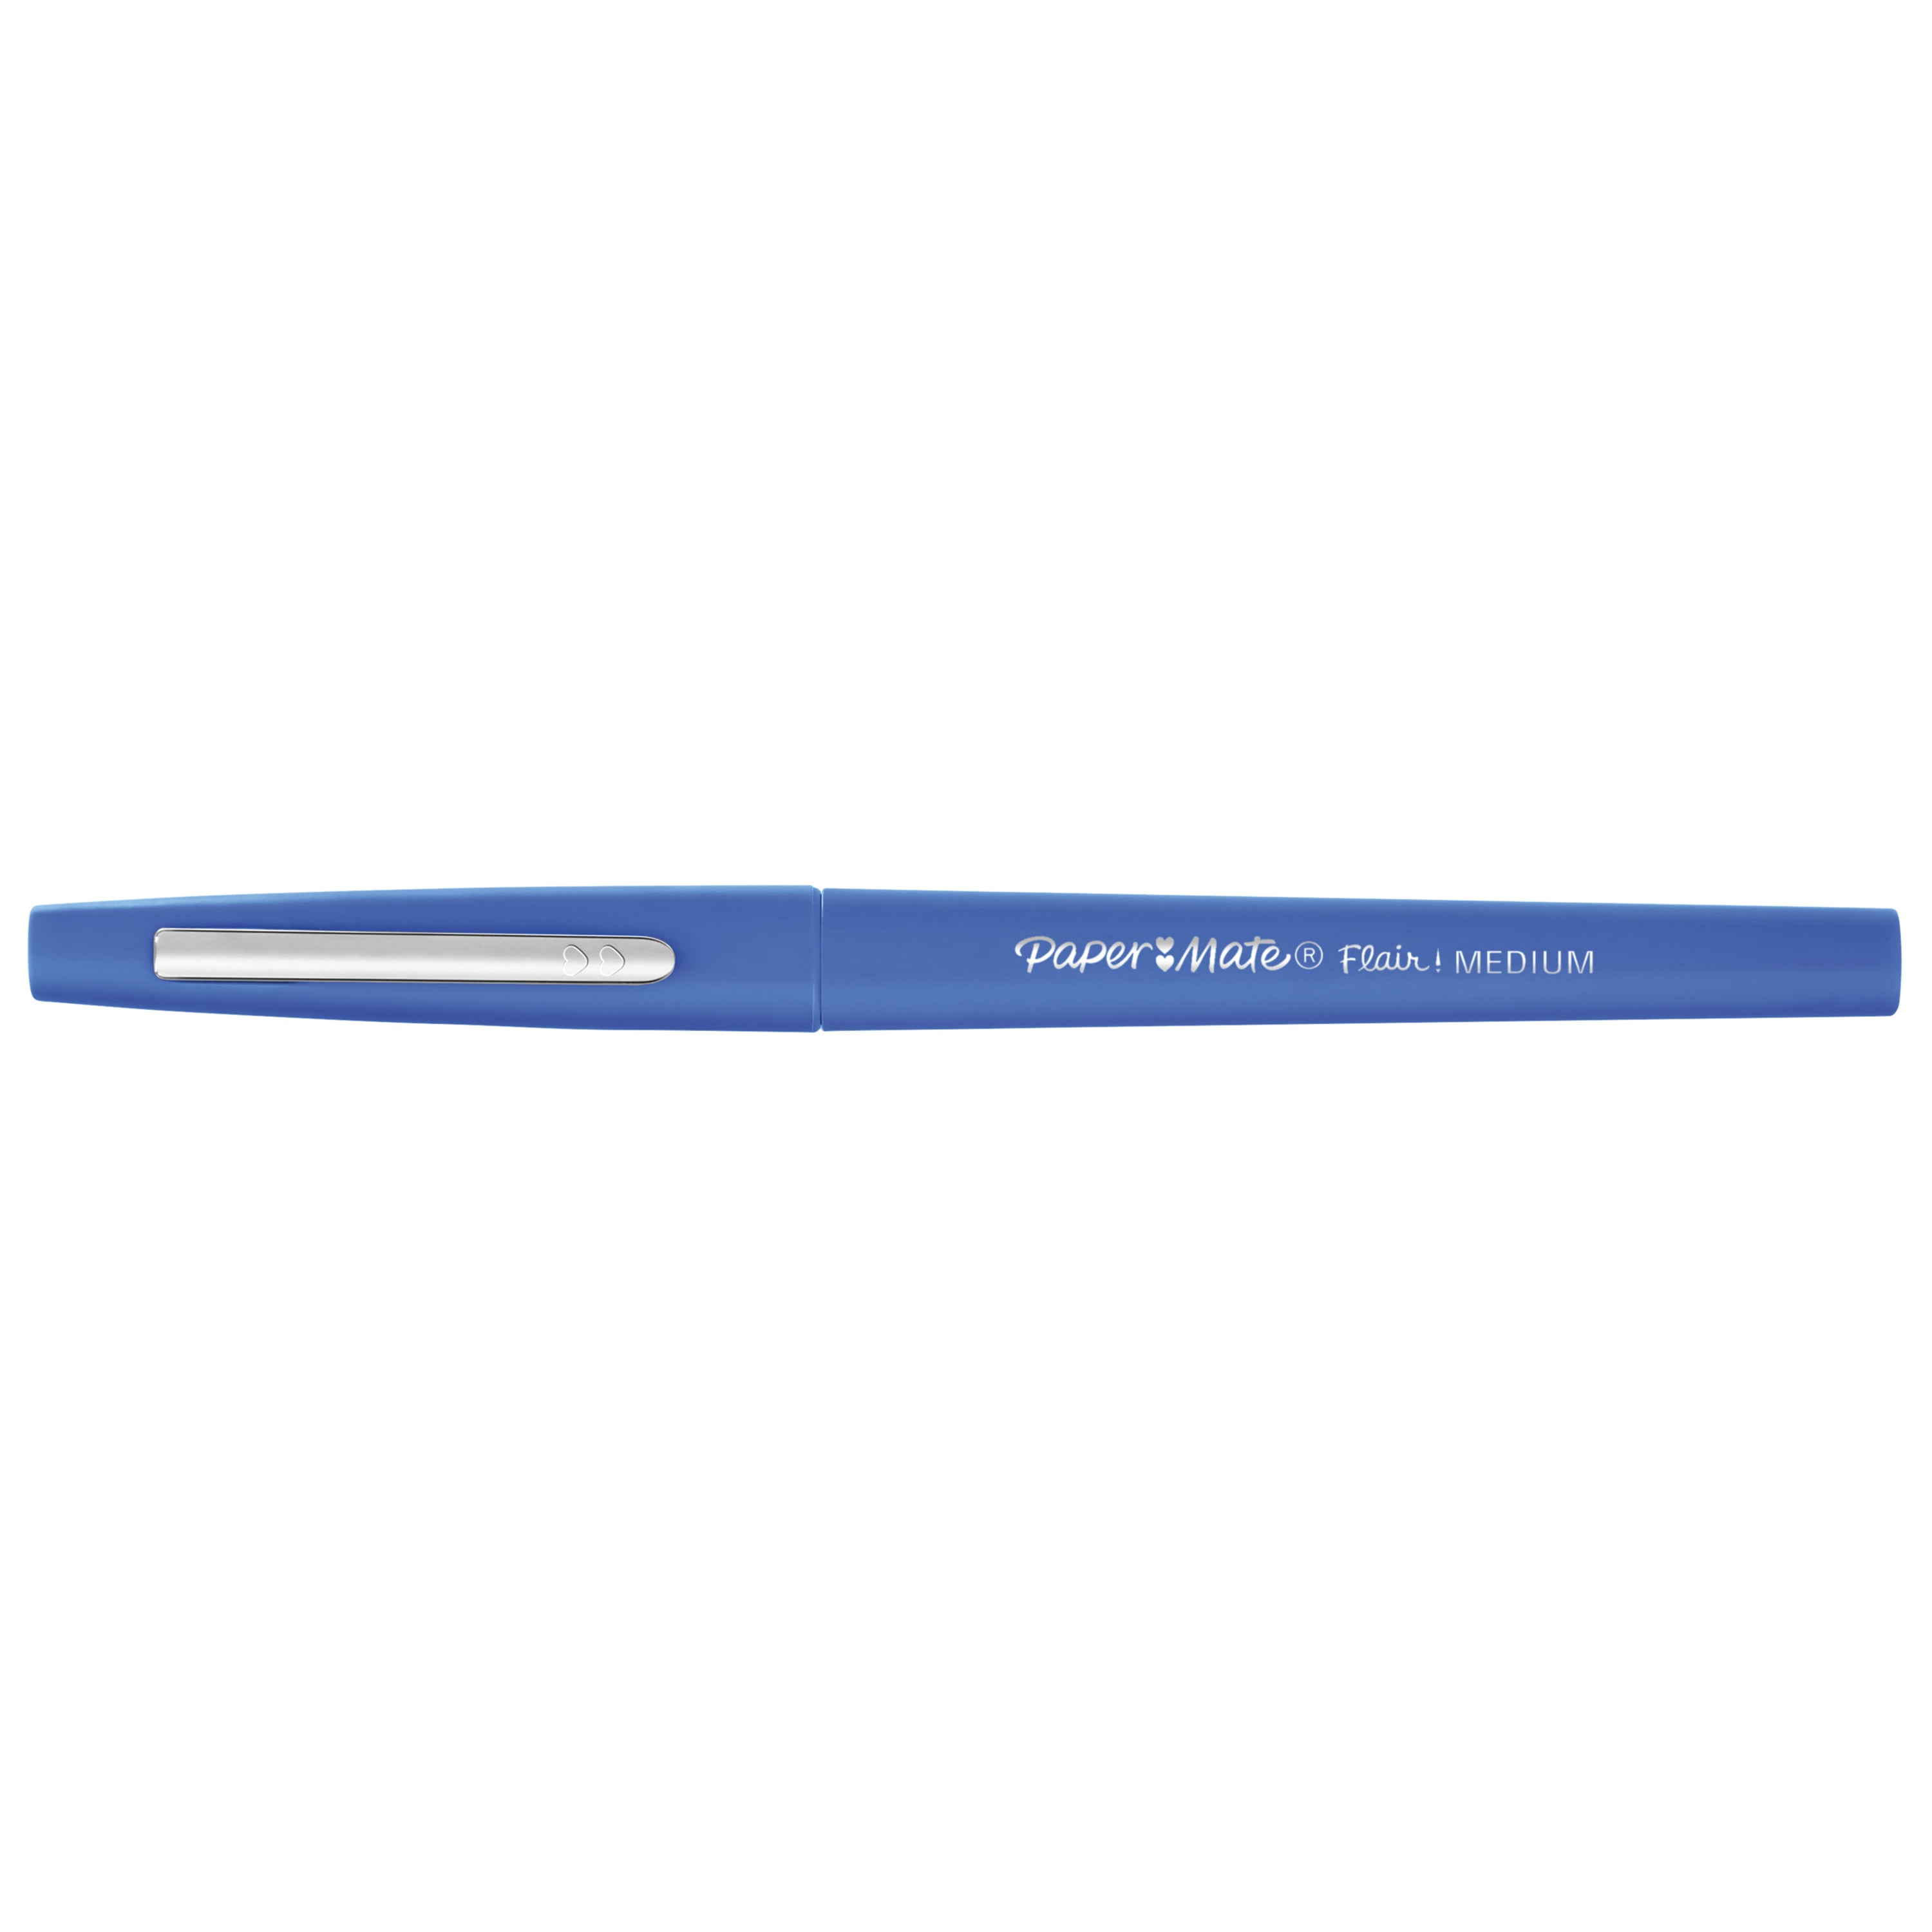 Filare Direction Water-Based Felt-Tip Pen by Zebra P-WYSS68-BL Blue  4901681462124